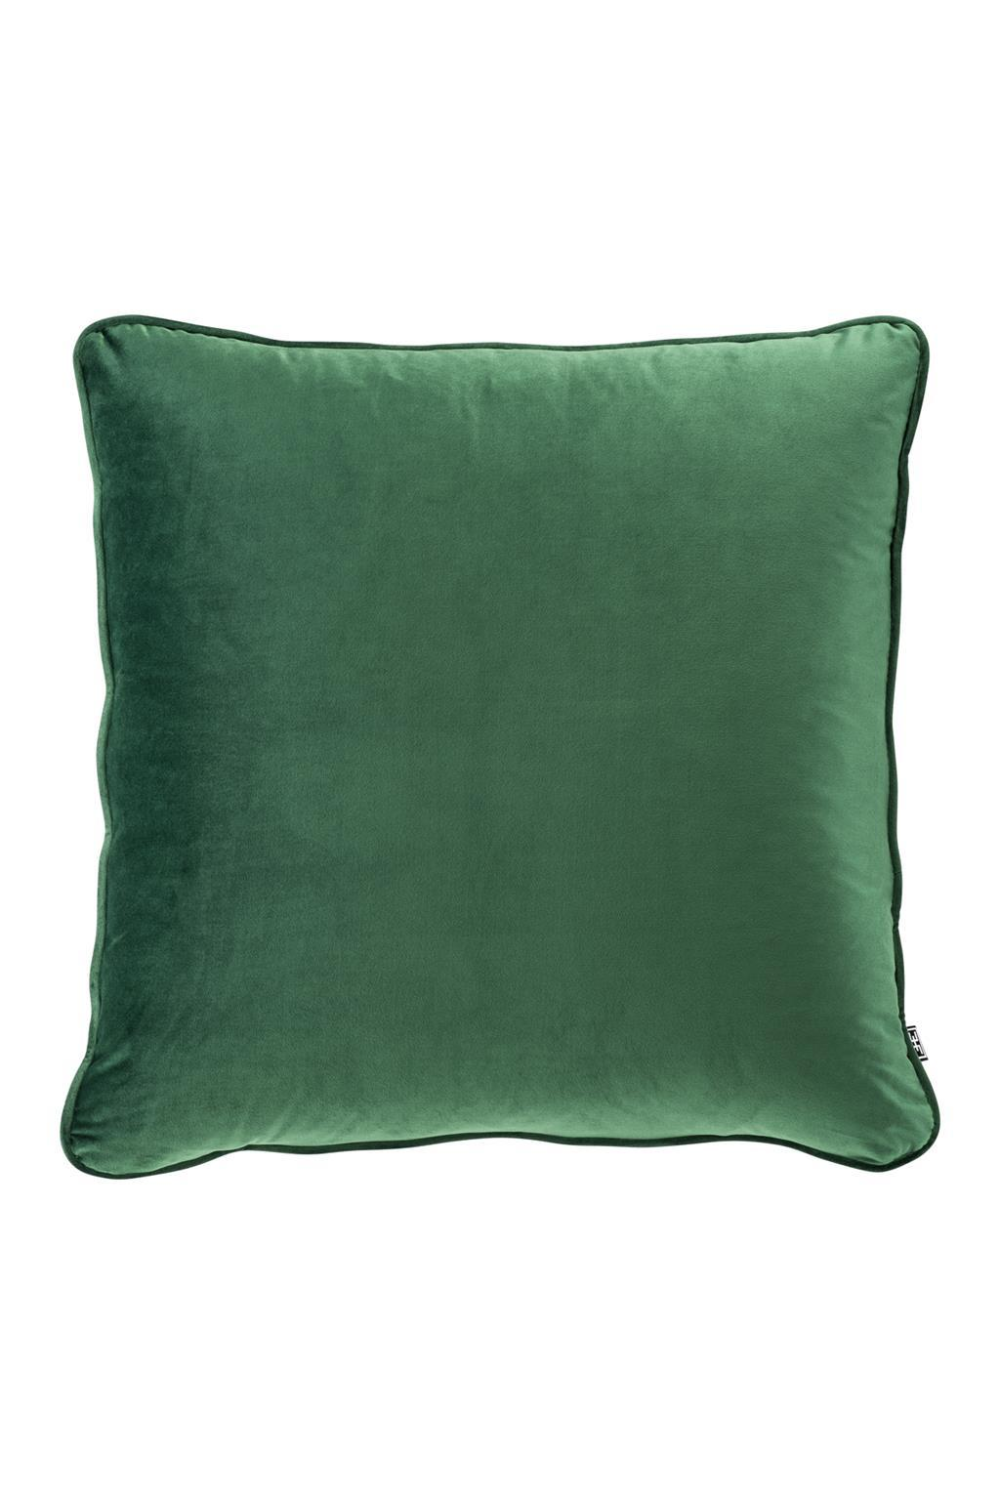 Square Green Velvet Pillow | Eichholtz Roche | OROA